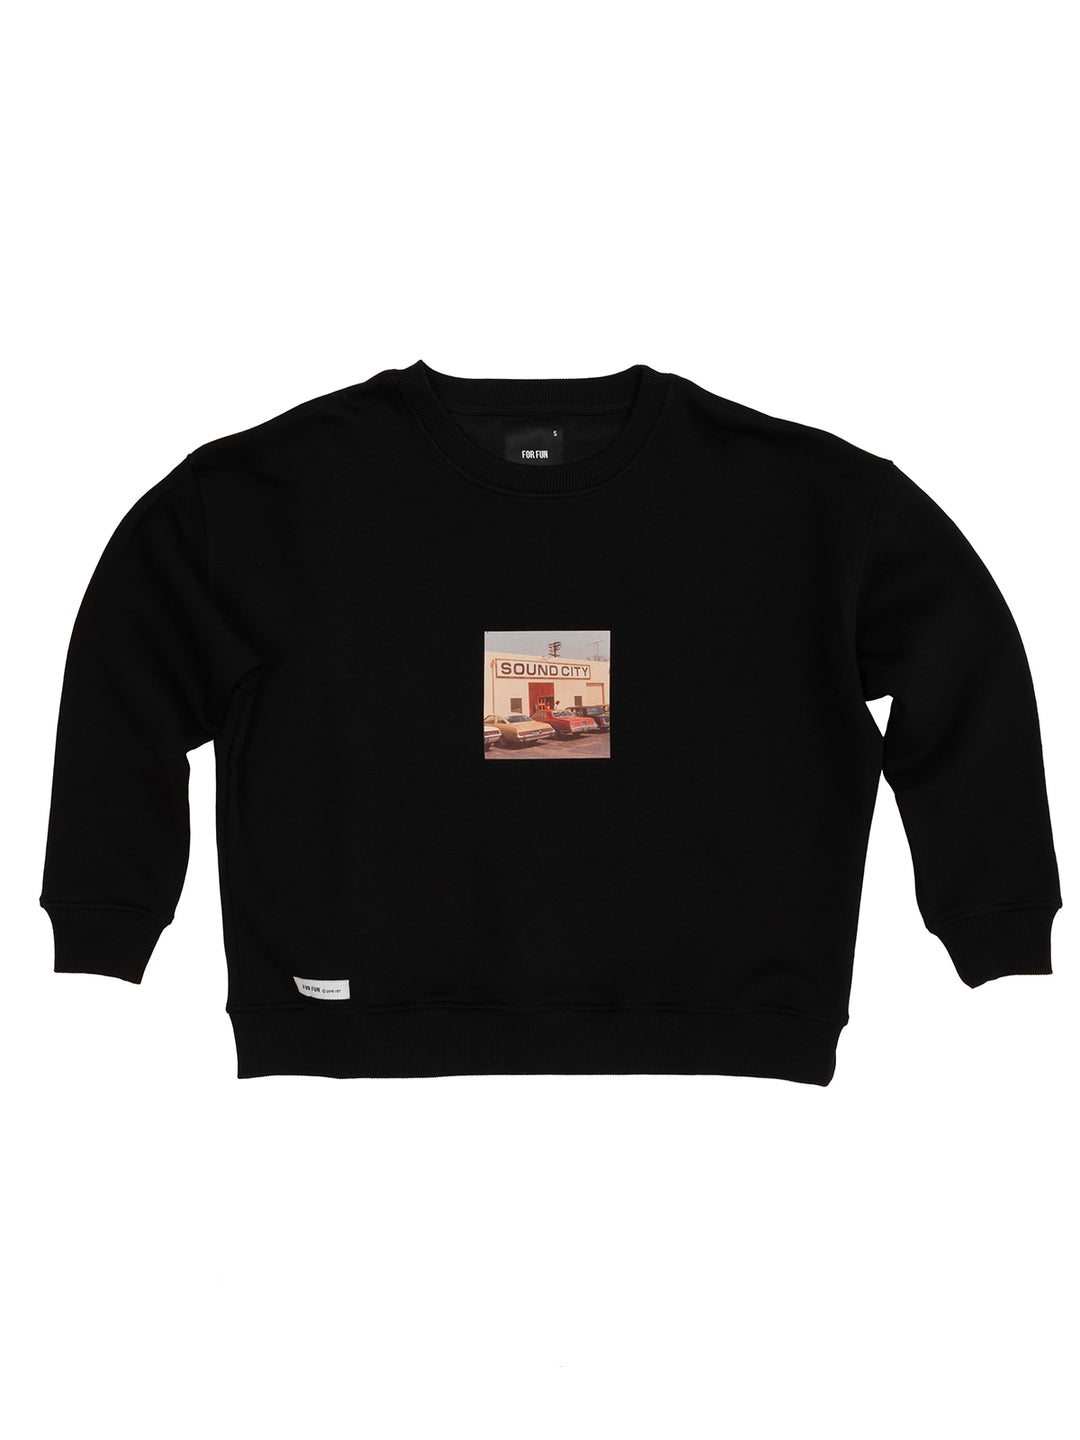 Sound City / Women's Sweatshirt